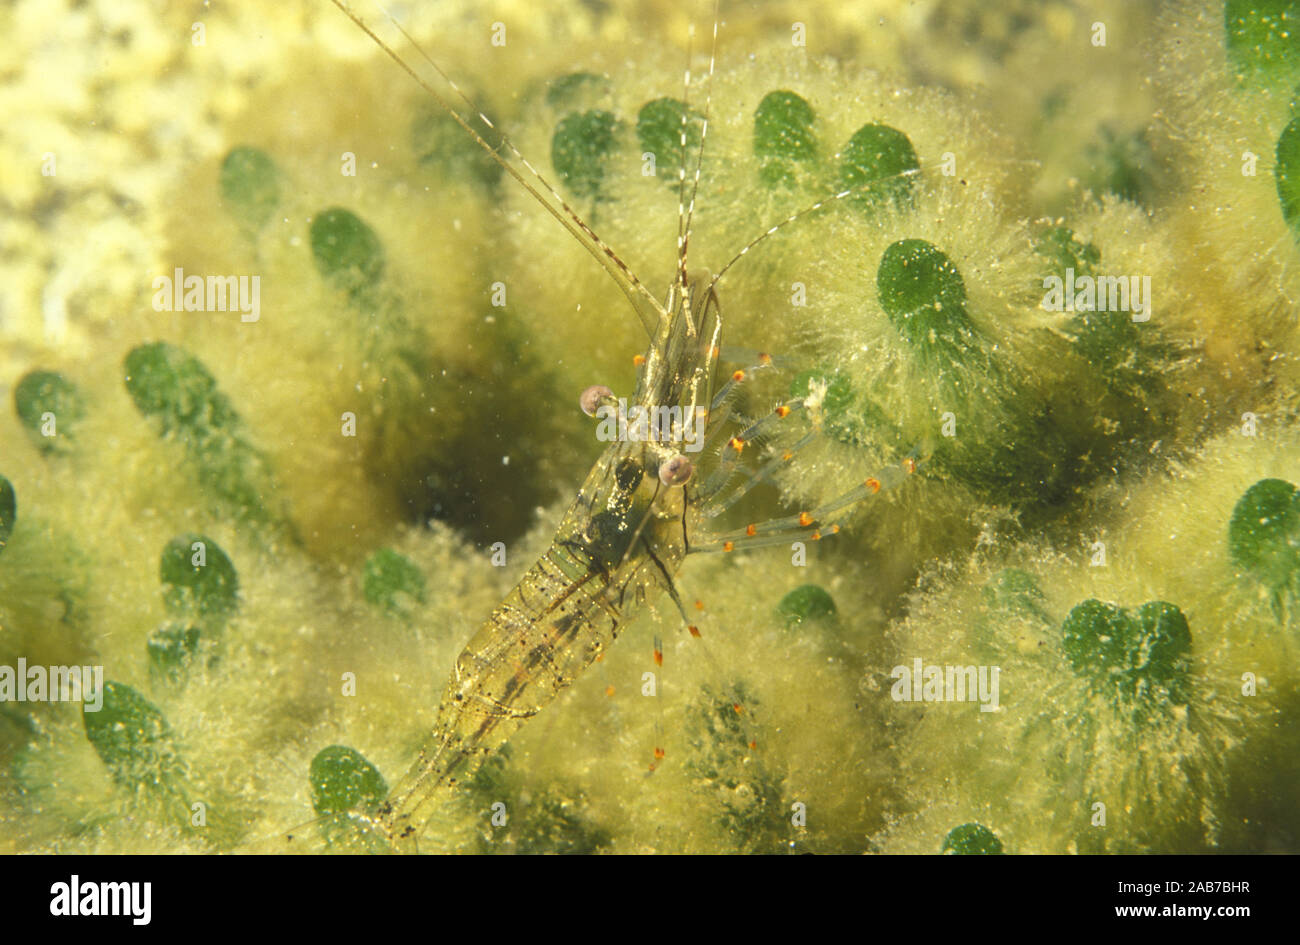 Palaemoniid shrimp (Macrobrachium sp.), favours seagrass and kelp habitats, here seen on green algae (Codium harveyi). East coast, Tasmania, Australia Stock Photo